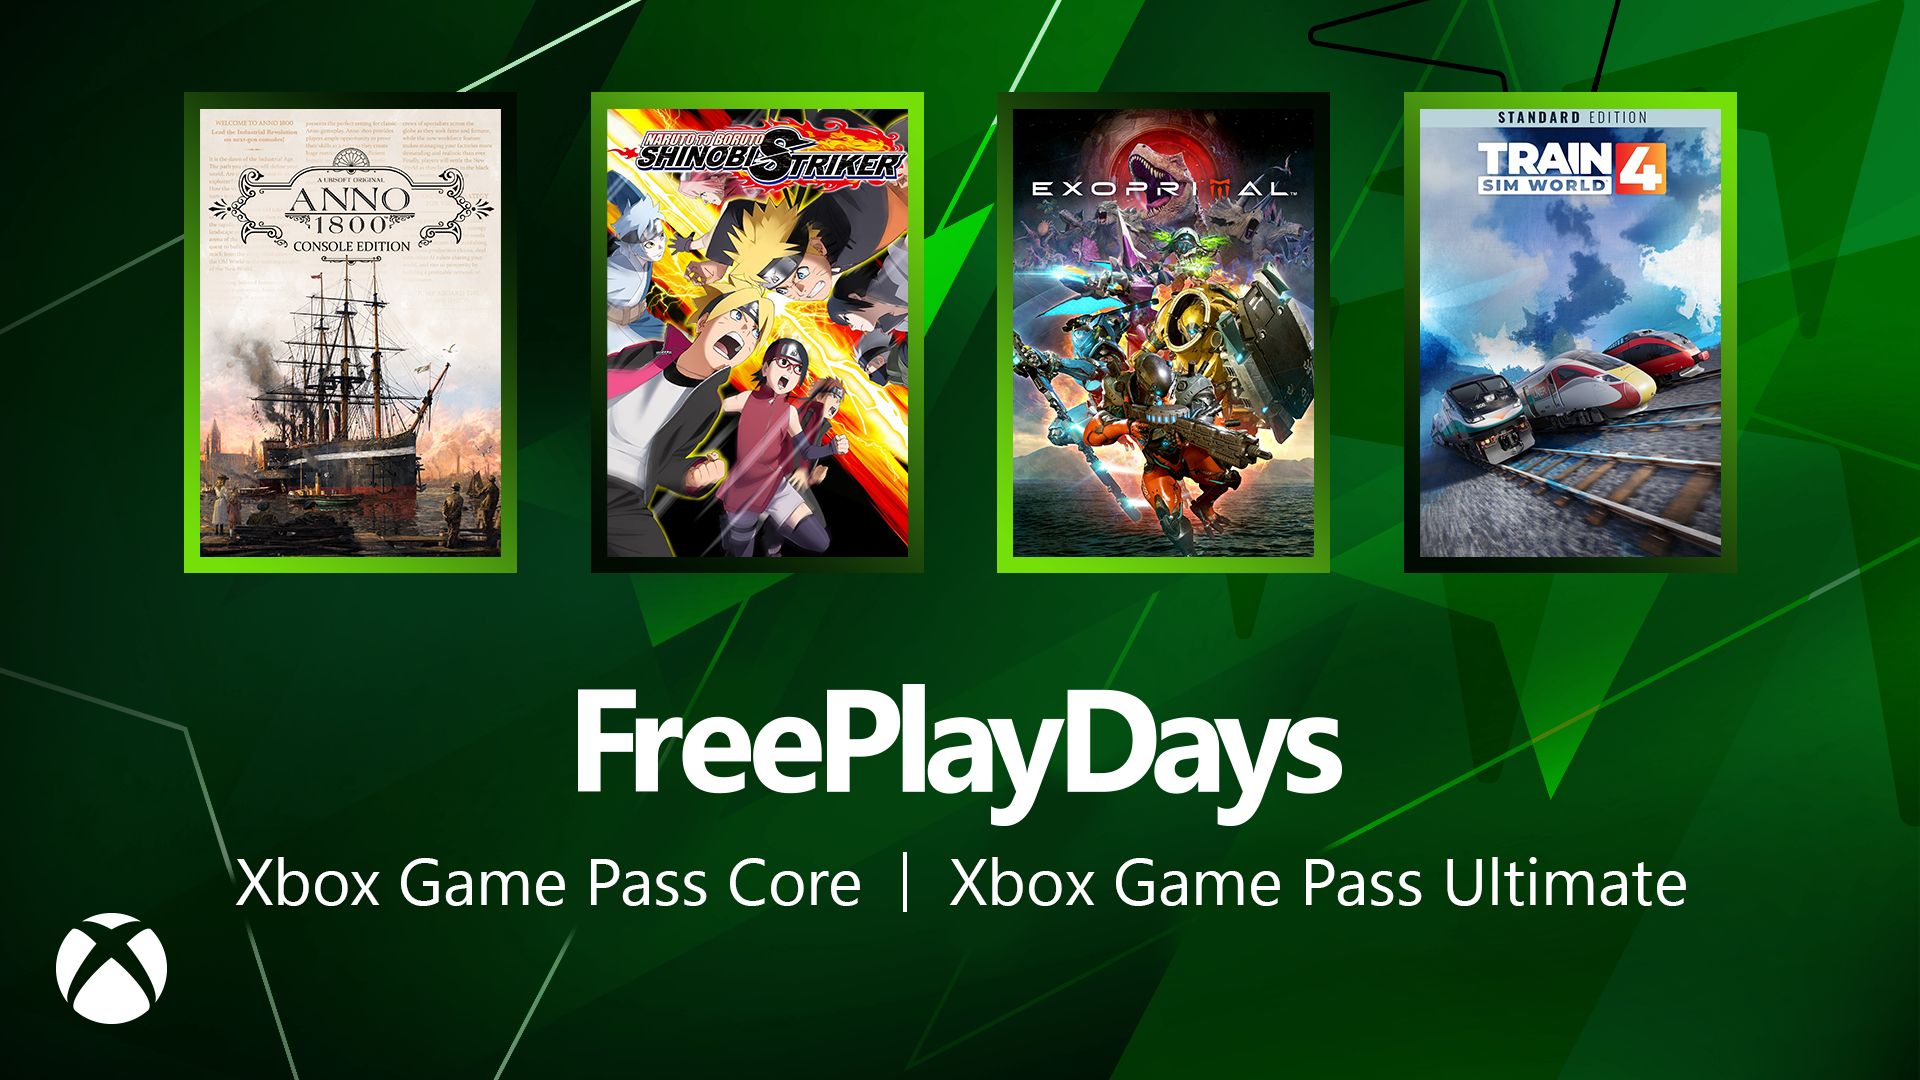 Free Play Days - November 9